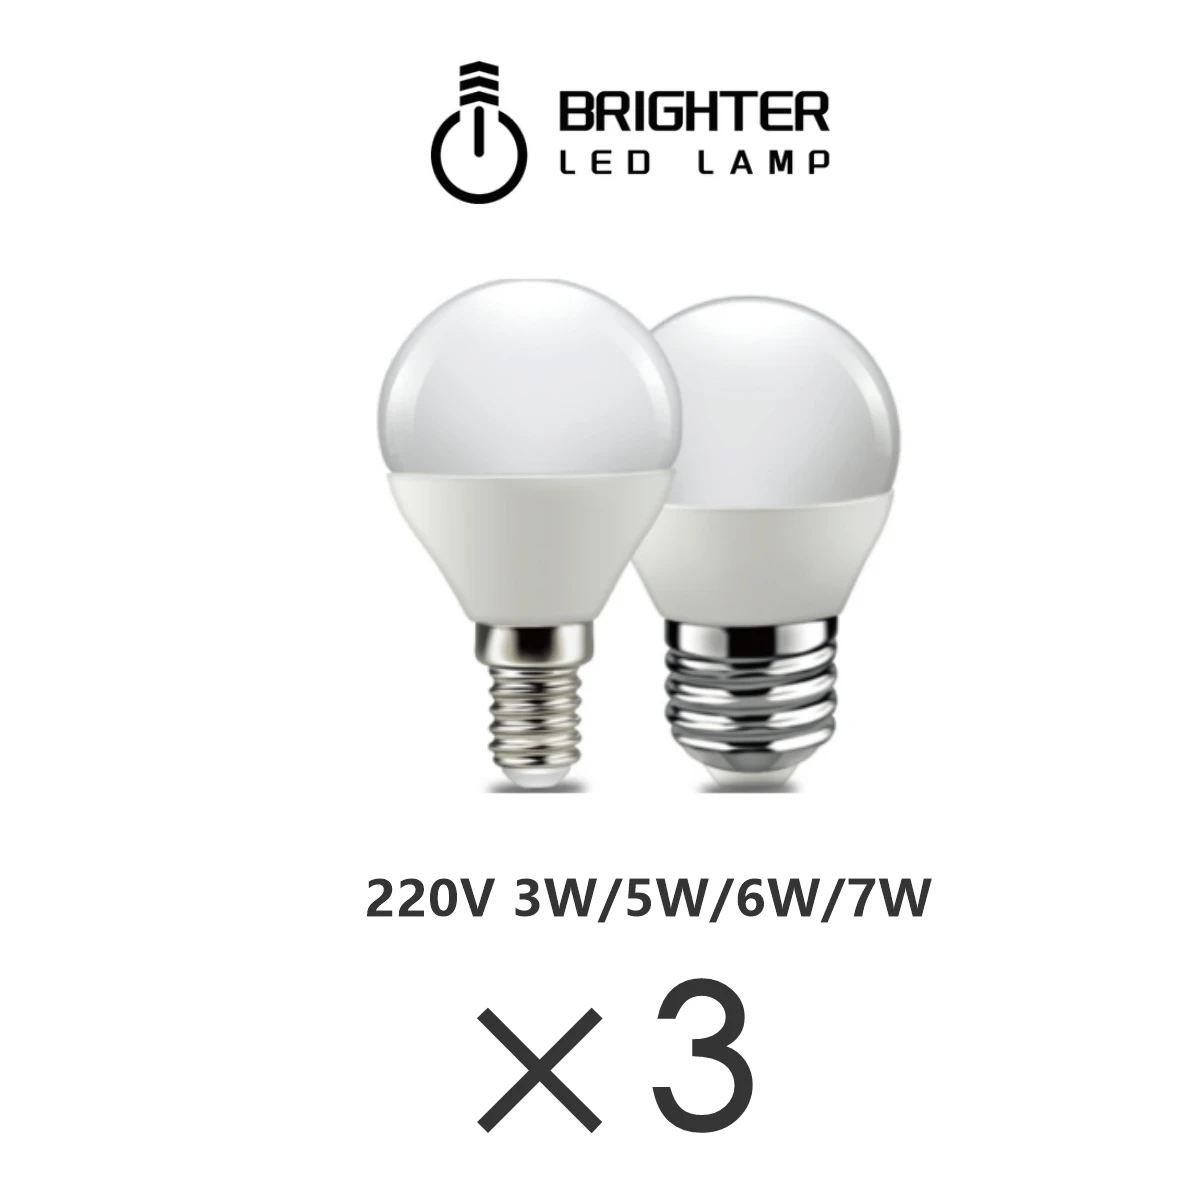 3pcs LED bulb MINI G45 220V 3W-7W Super bright warm white light suitable for down lamp kitchen living room bathroom study